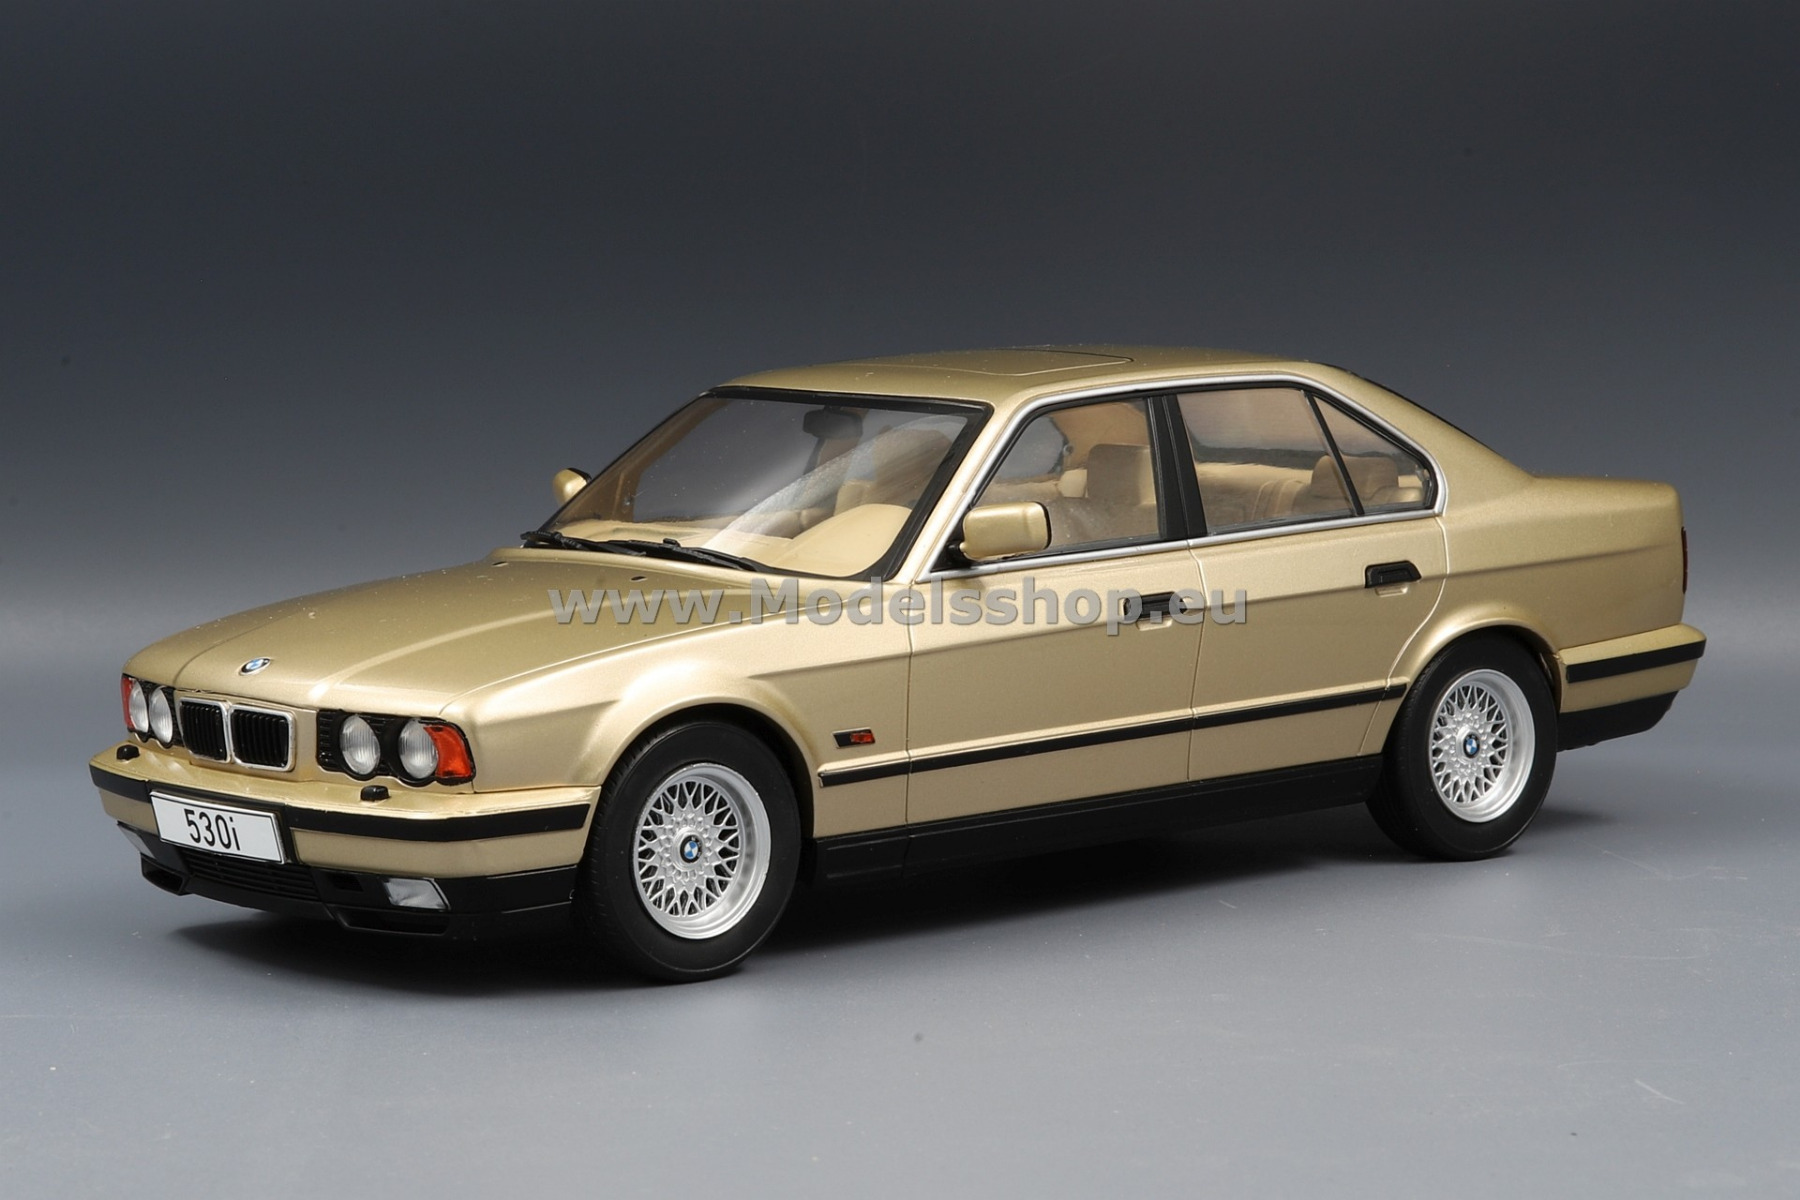 BMW 5-series (E34), 1992 / beige-metallic/